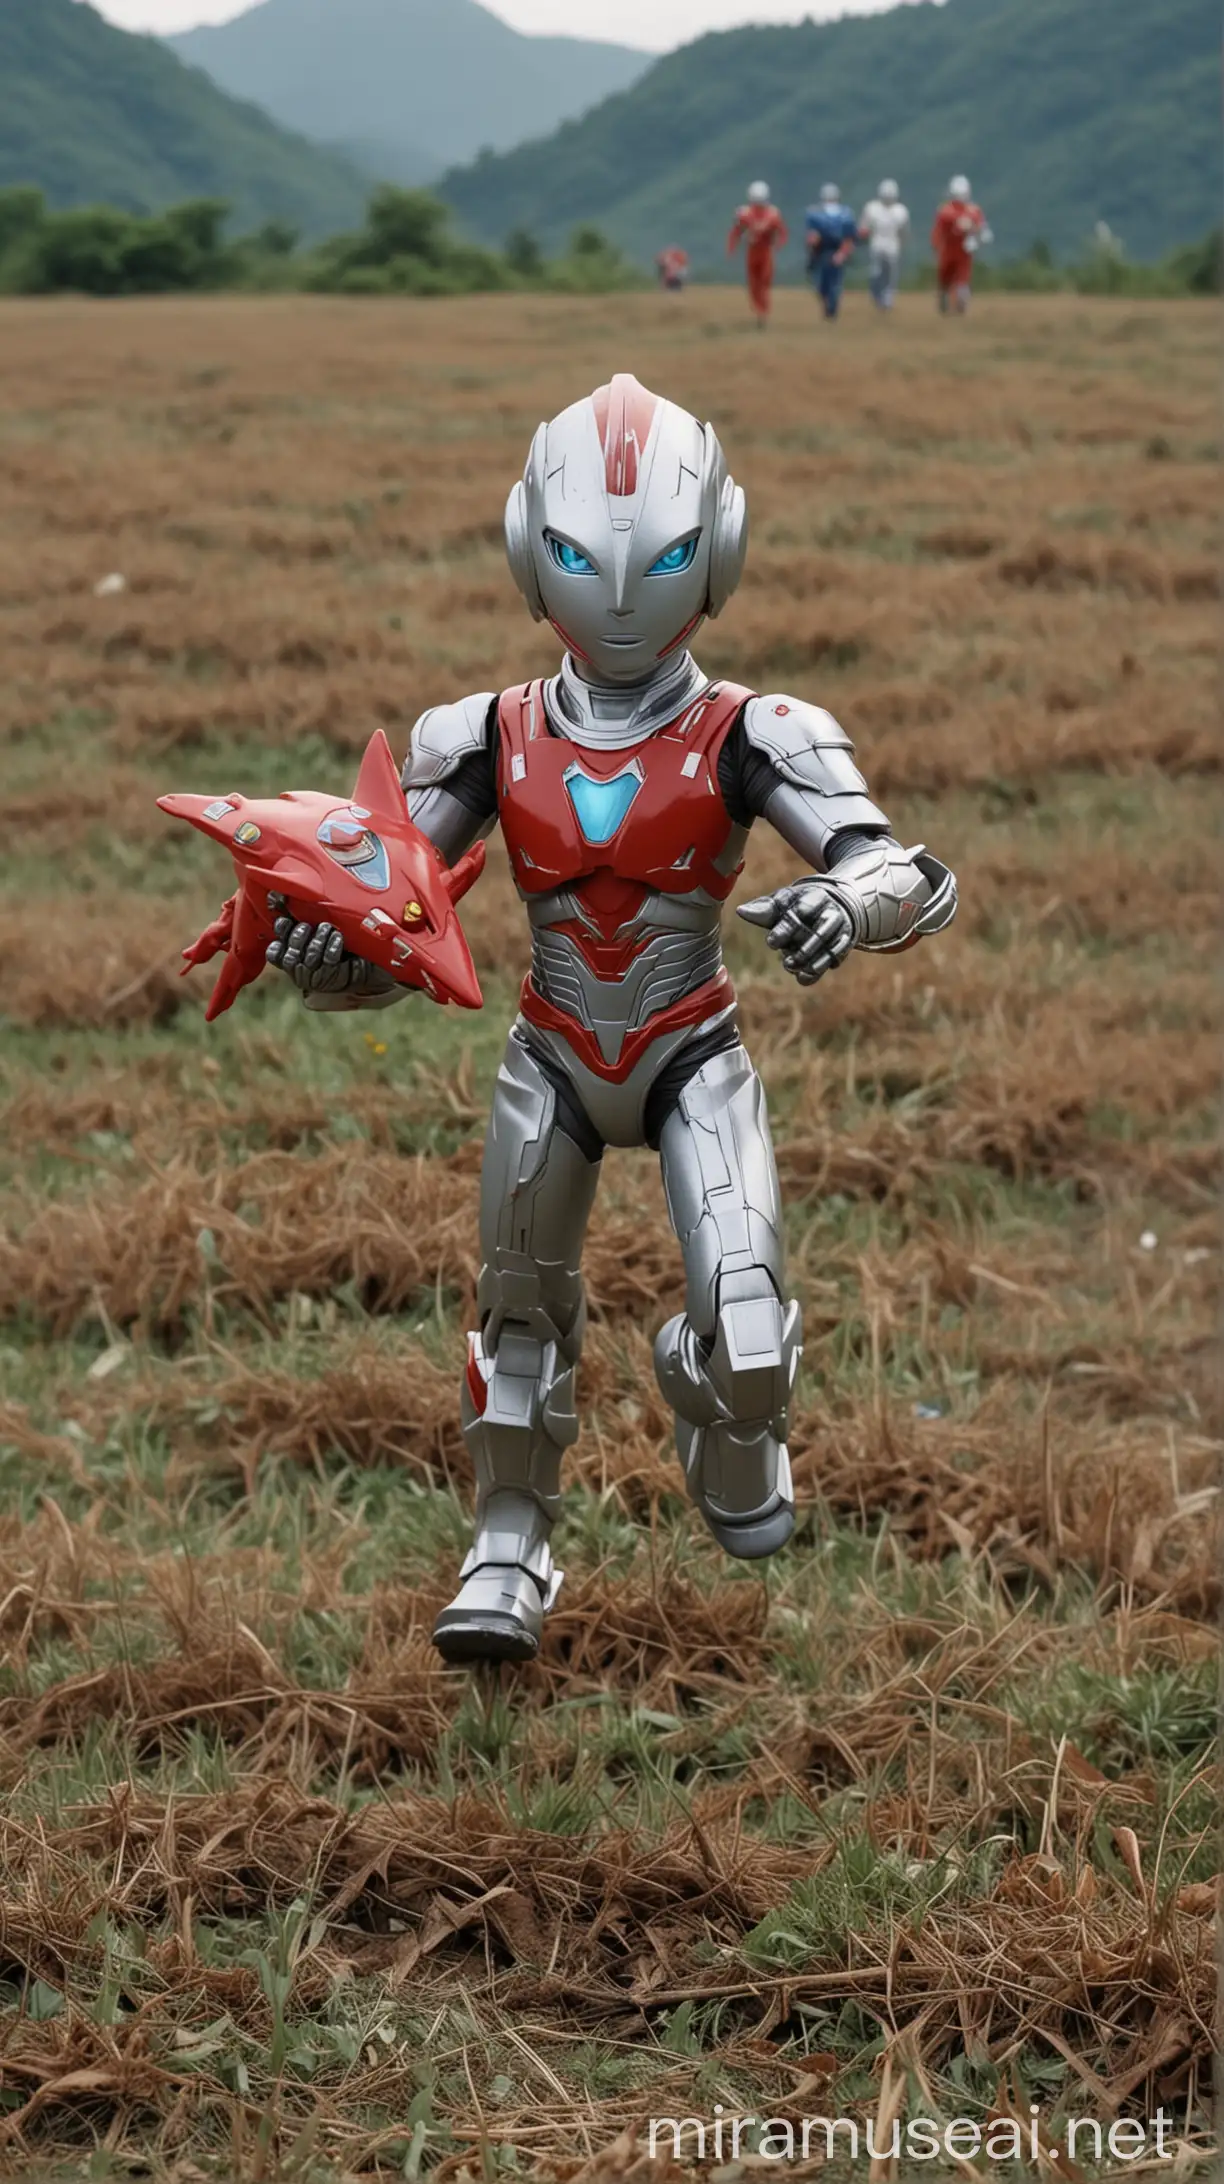 Joyful Boy with Ultraman Toy Running in Field for Film Crew Poster Recruitment